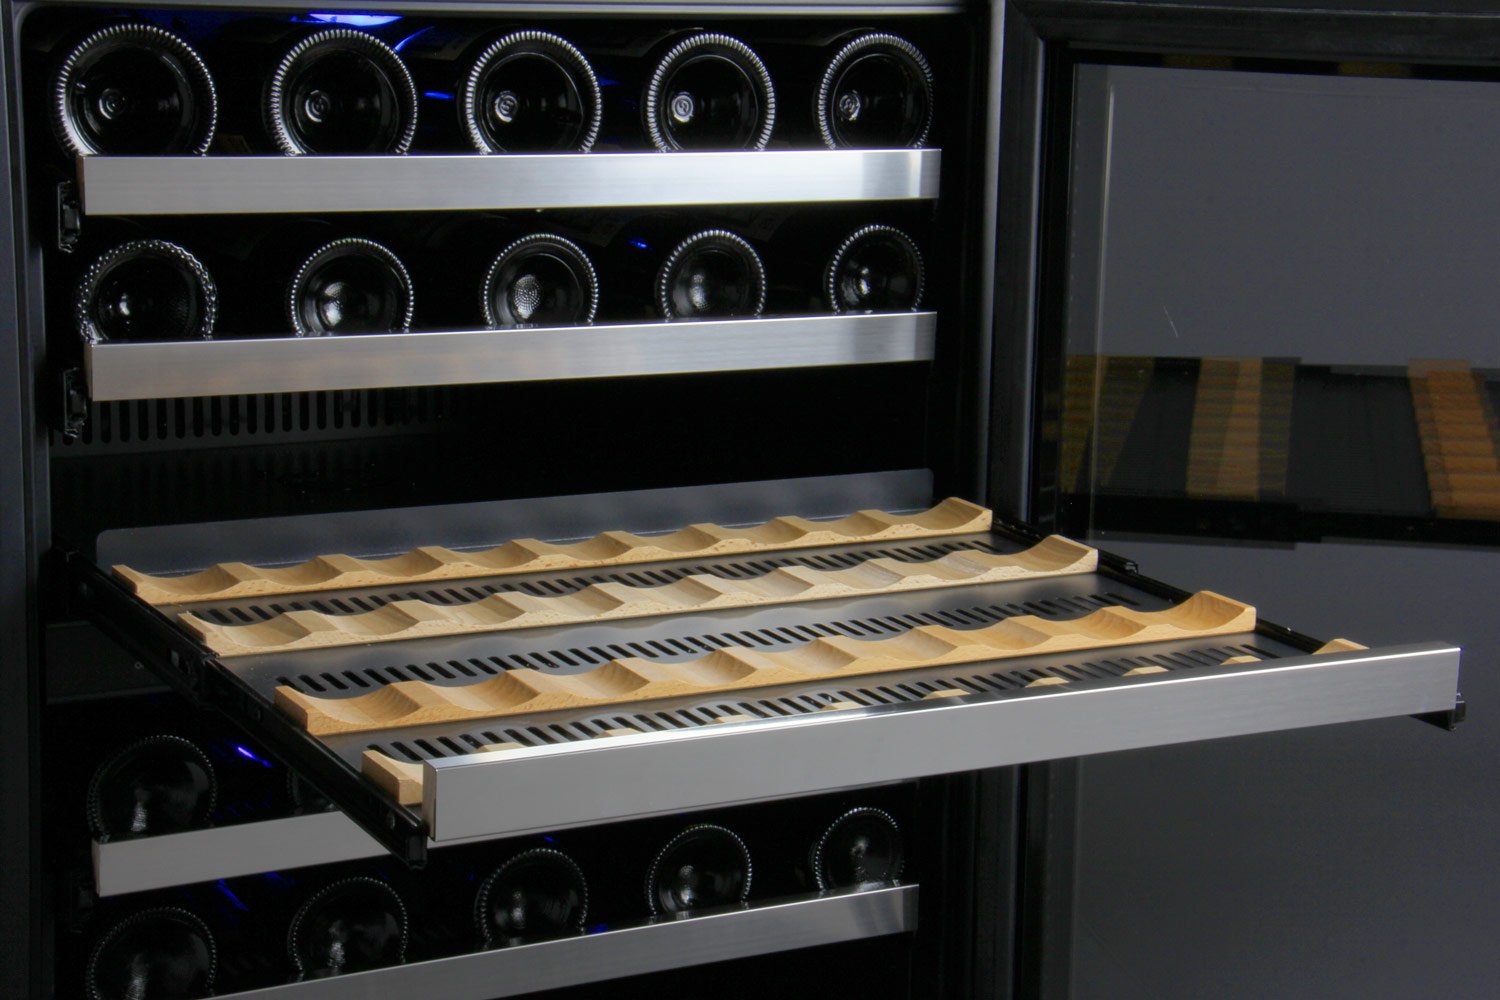 Allavino VSWR56-2SSRN Wine Refrigerator